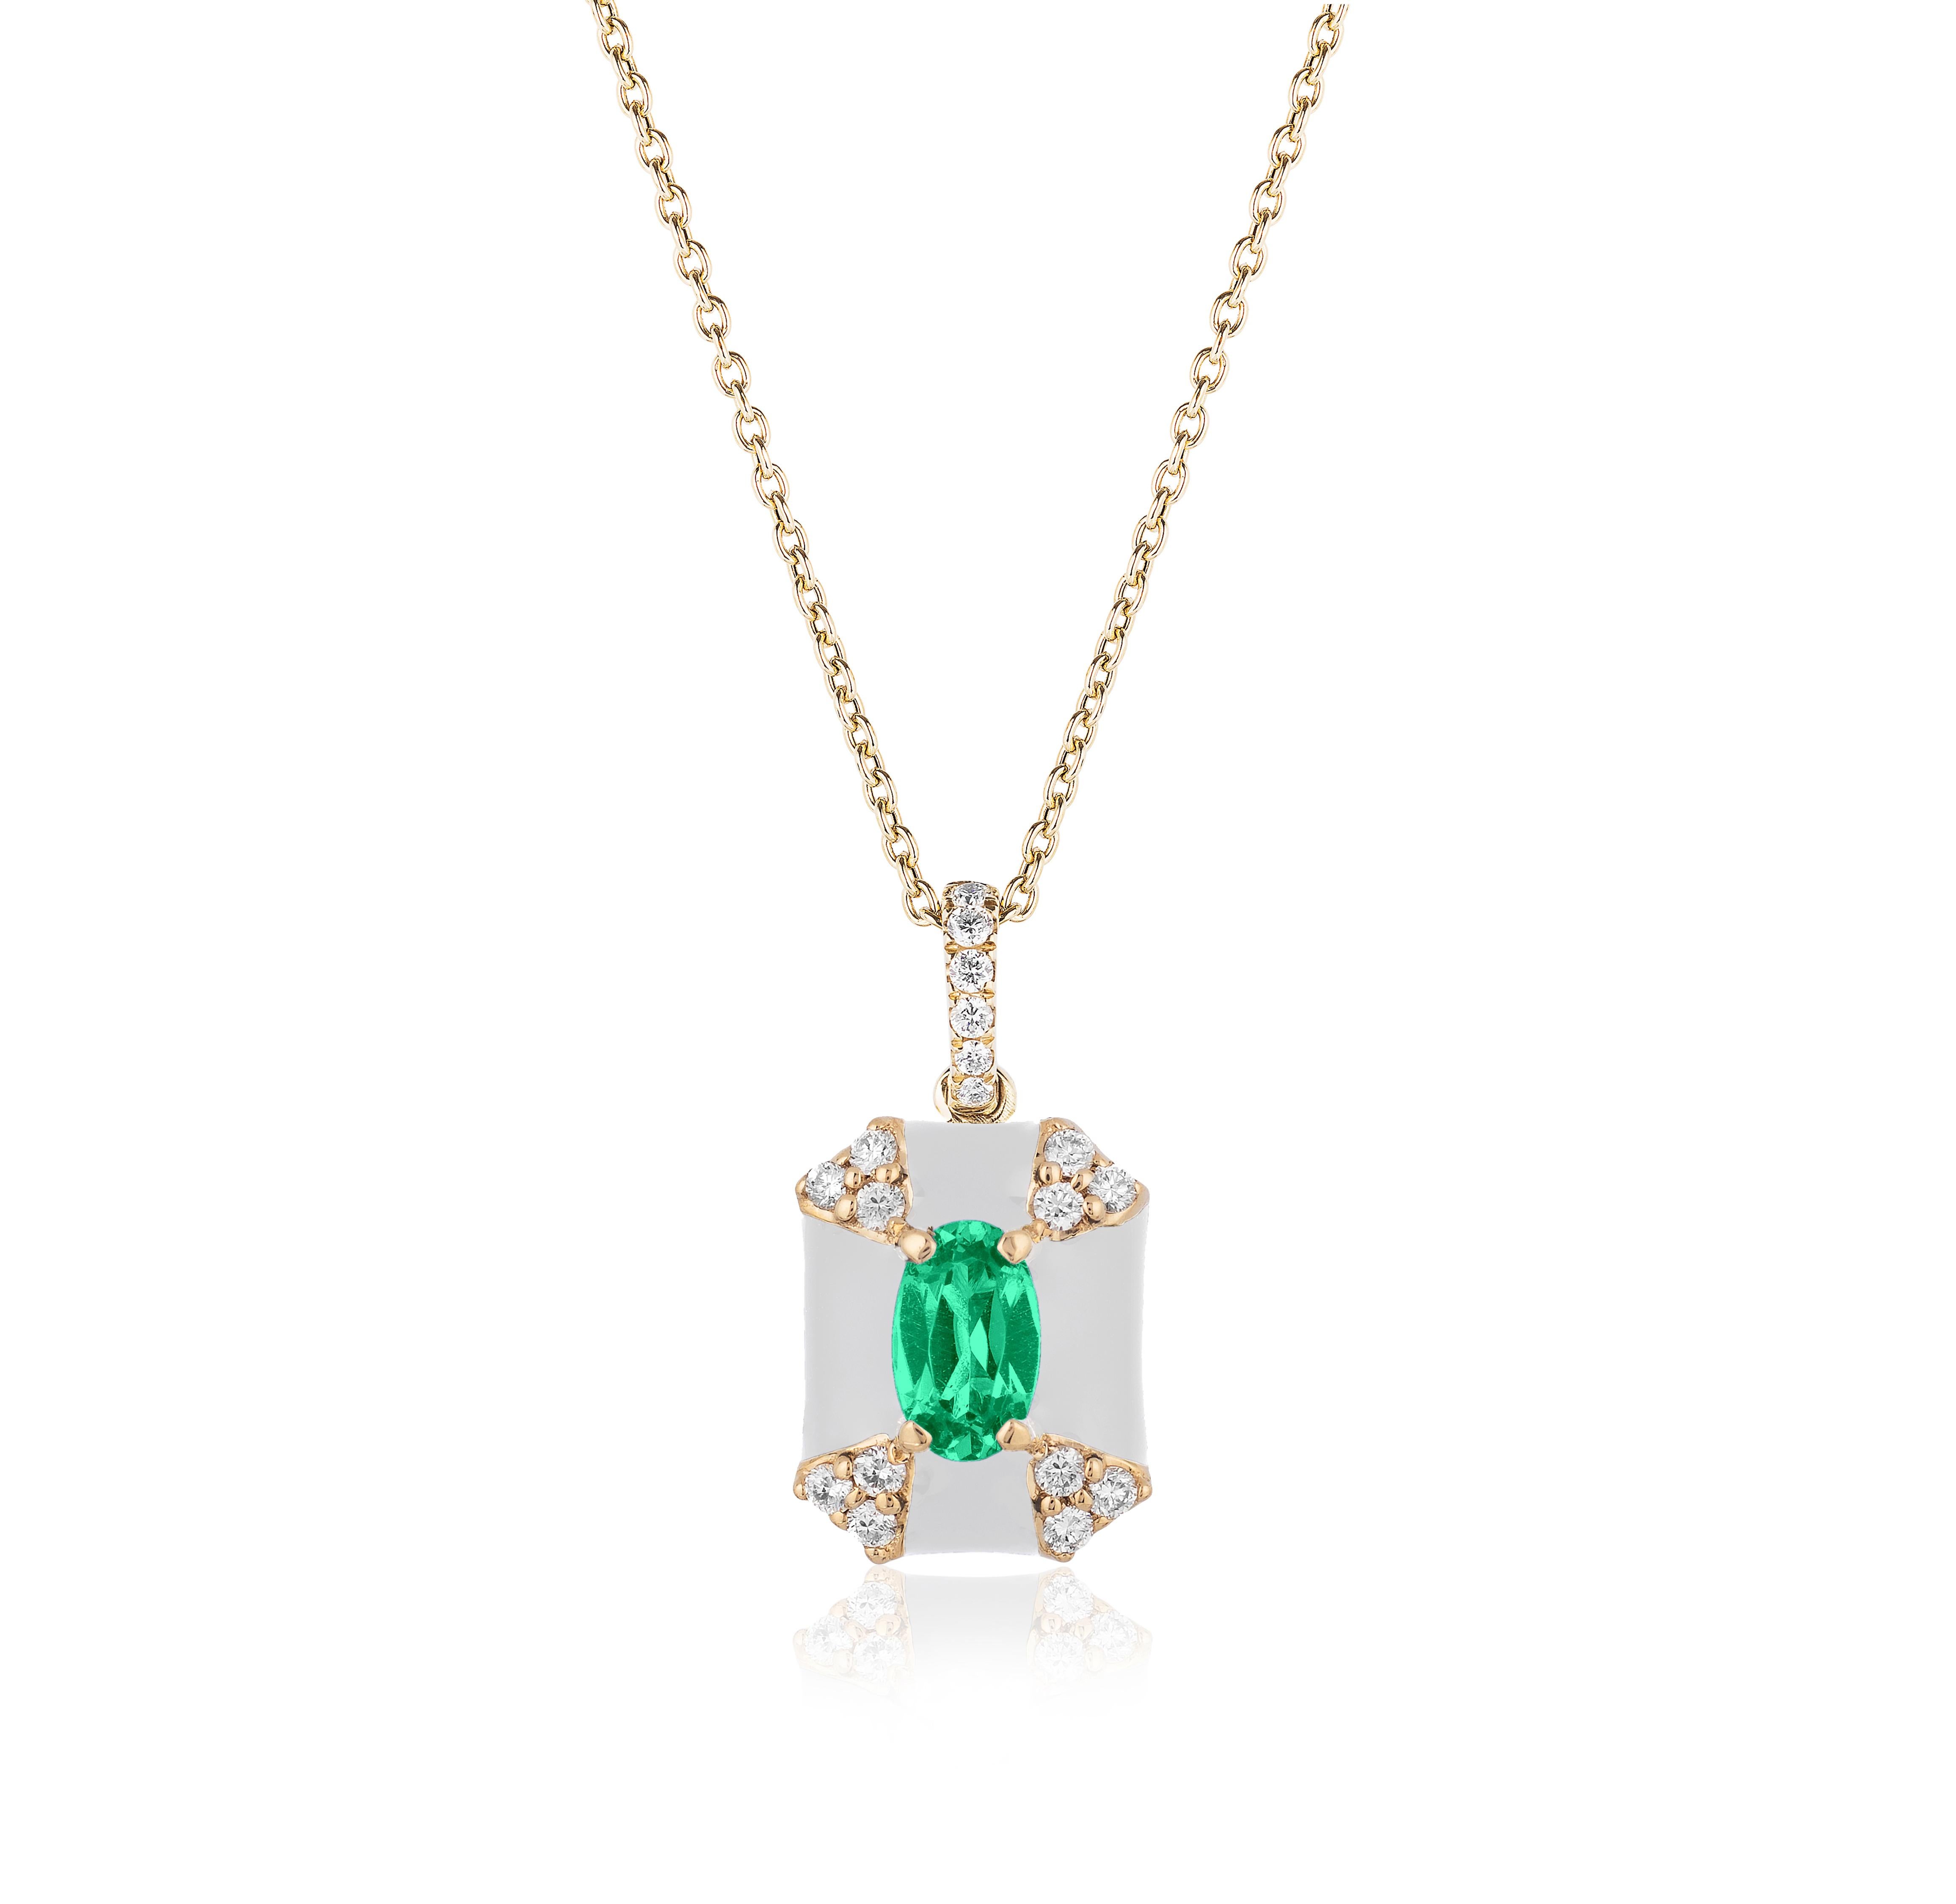 Contemporary Goshwara Octagon White Enamel with Emerald and Diamonds Pendant